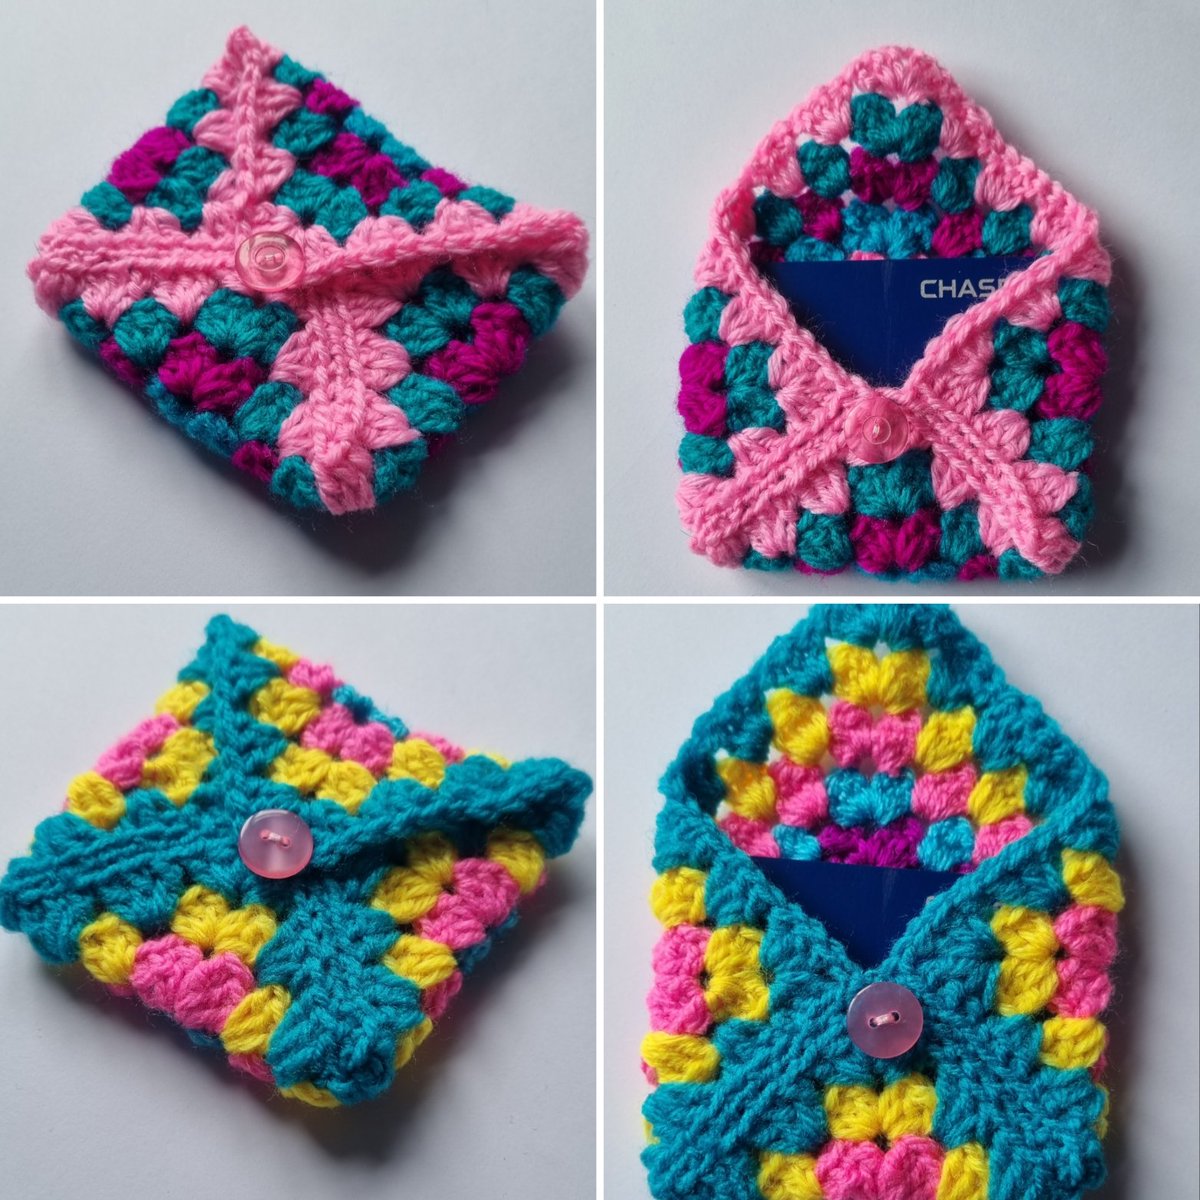 Ideal Christmas or birthday gifts handmade crochet purses/card wallets #giftsforgirls #crochetgifts #handmade